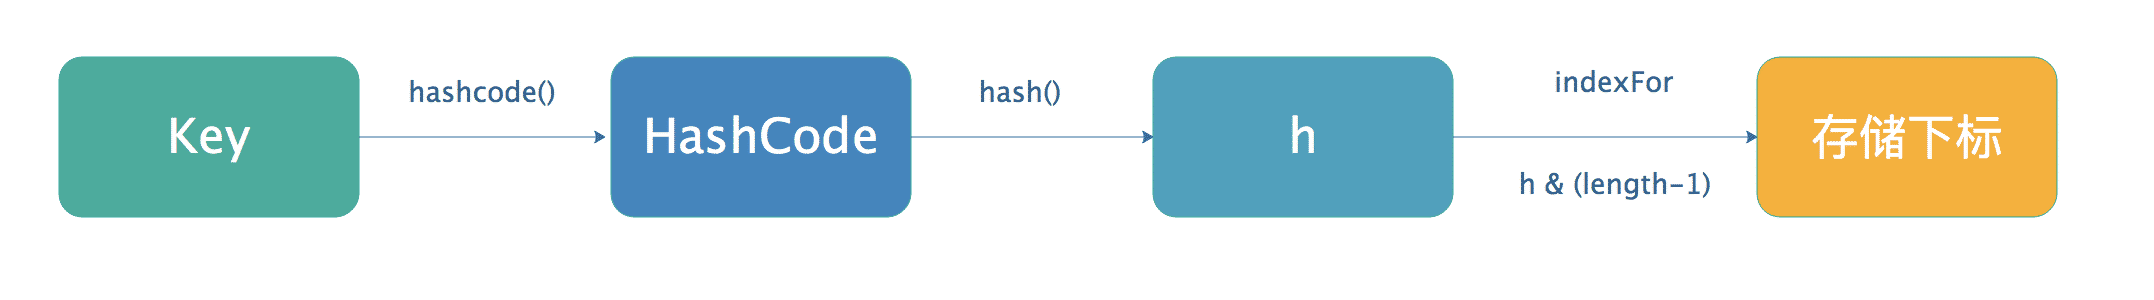 JDK1.7中HashMap的put()方法图解